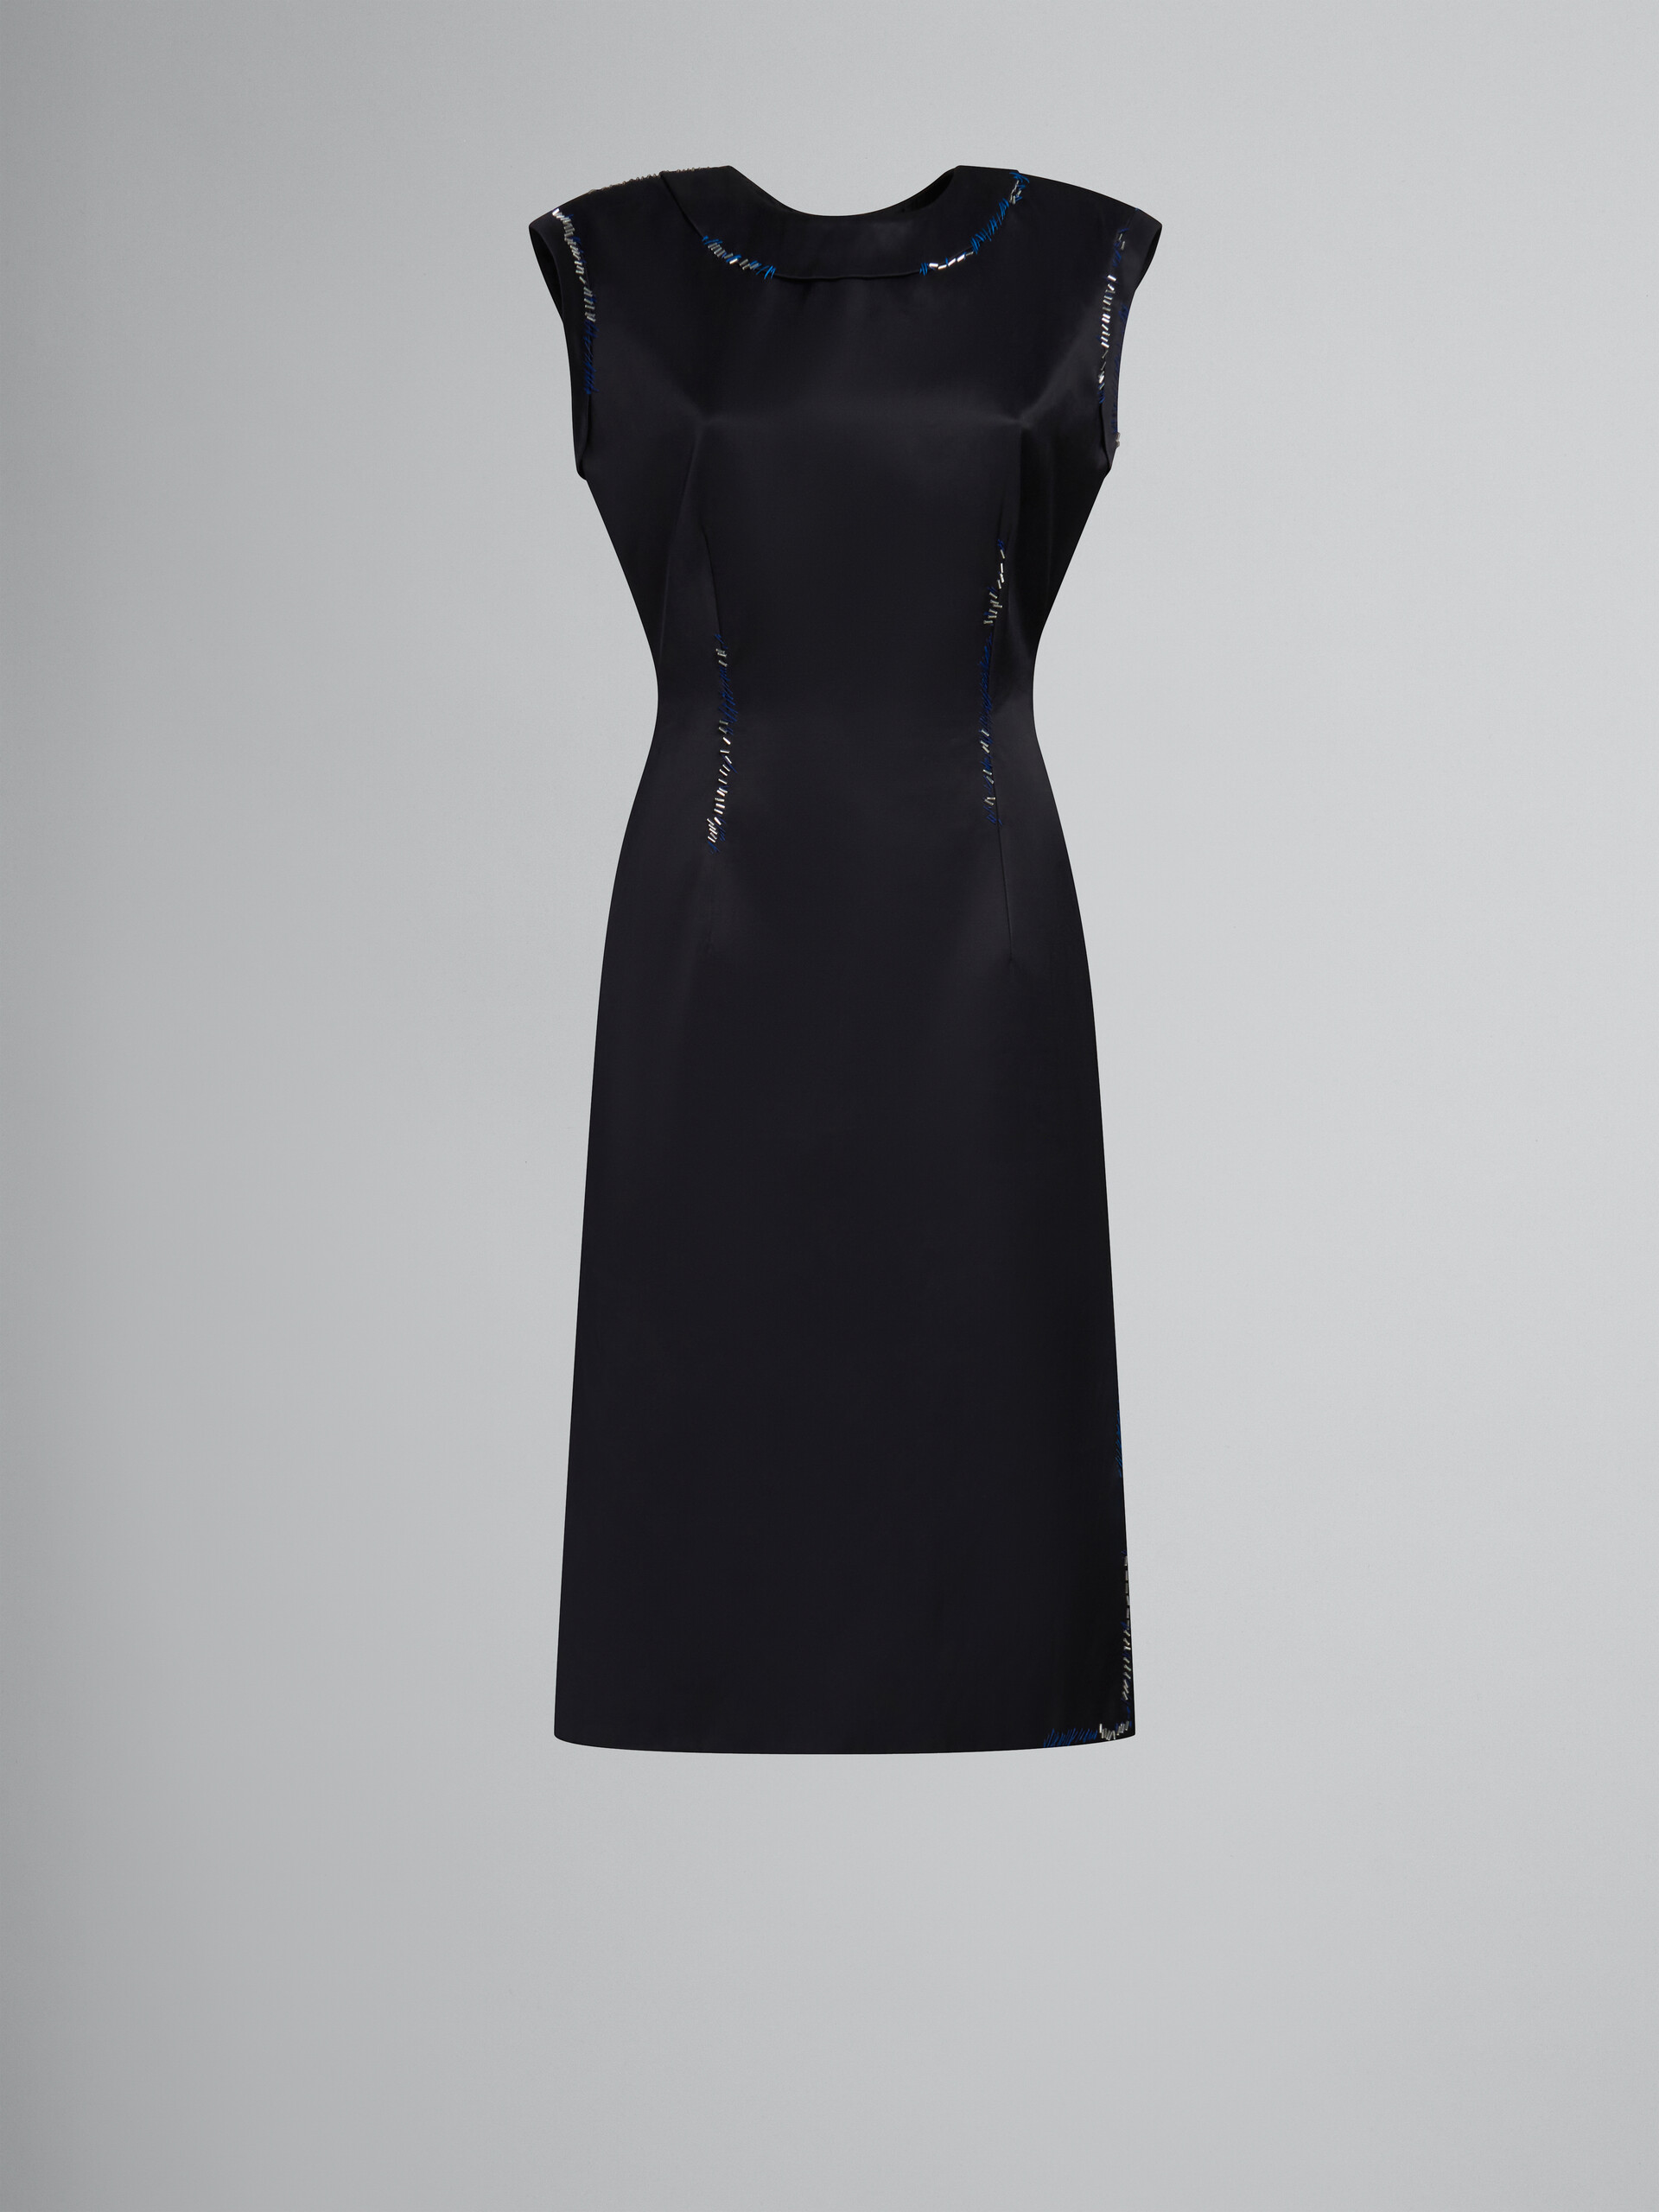 Black duchesse satin sheath dress with bead mending - Dresses - Image 1